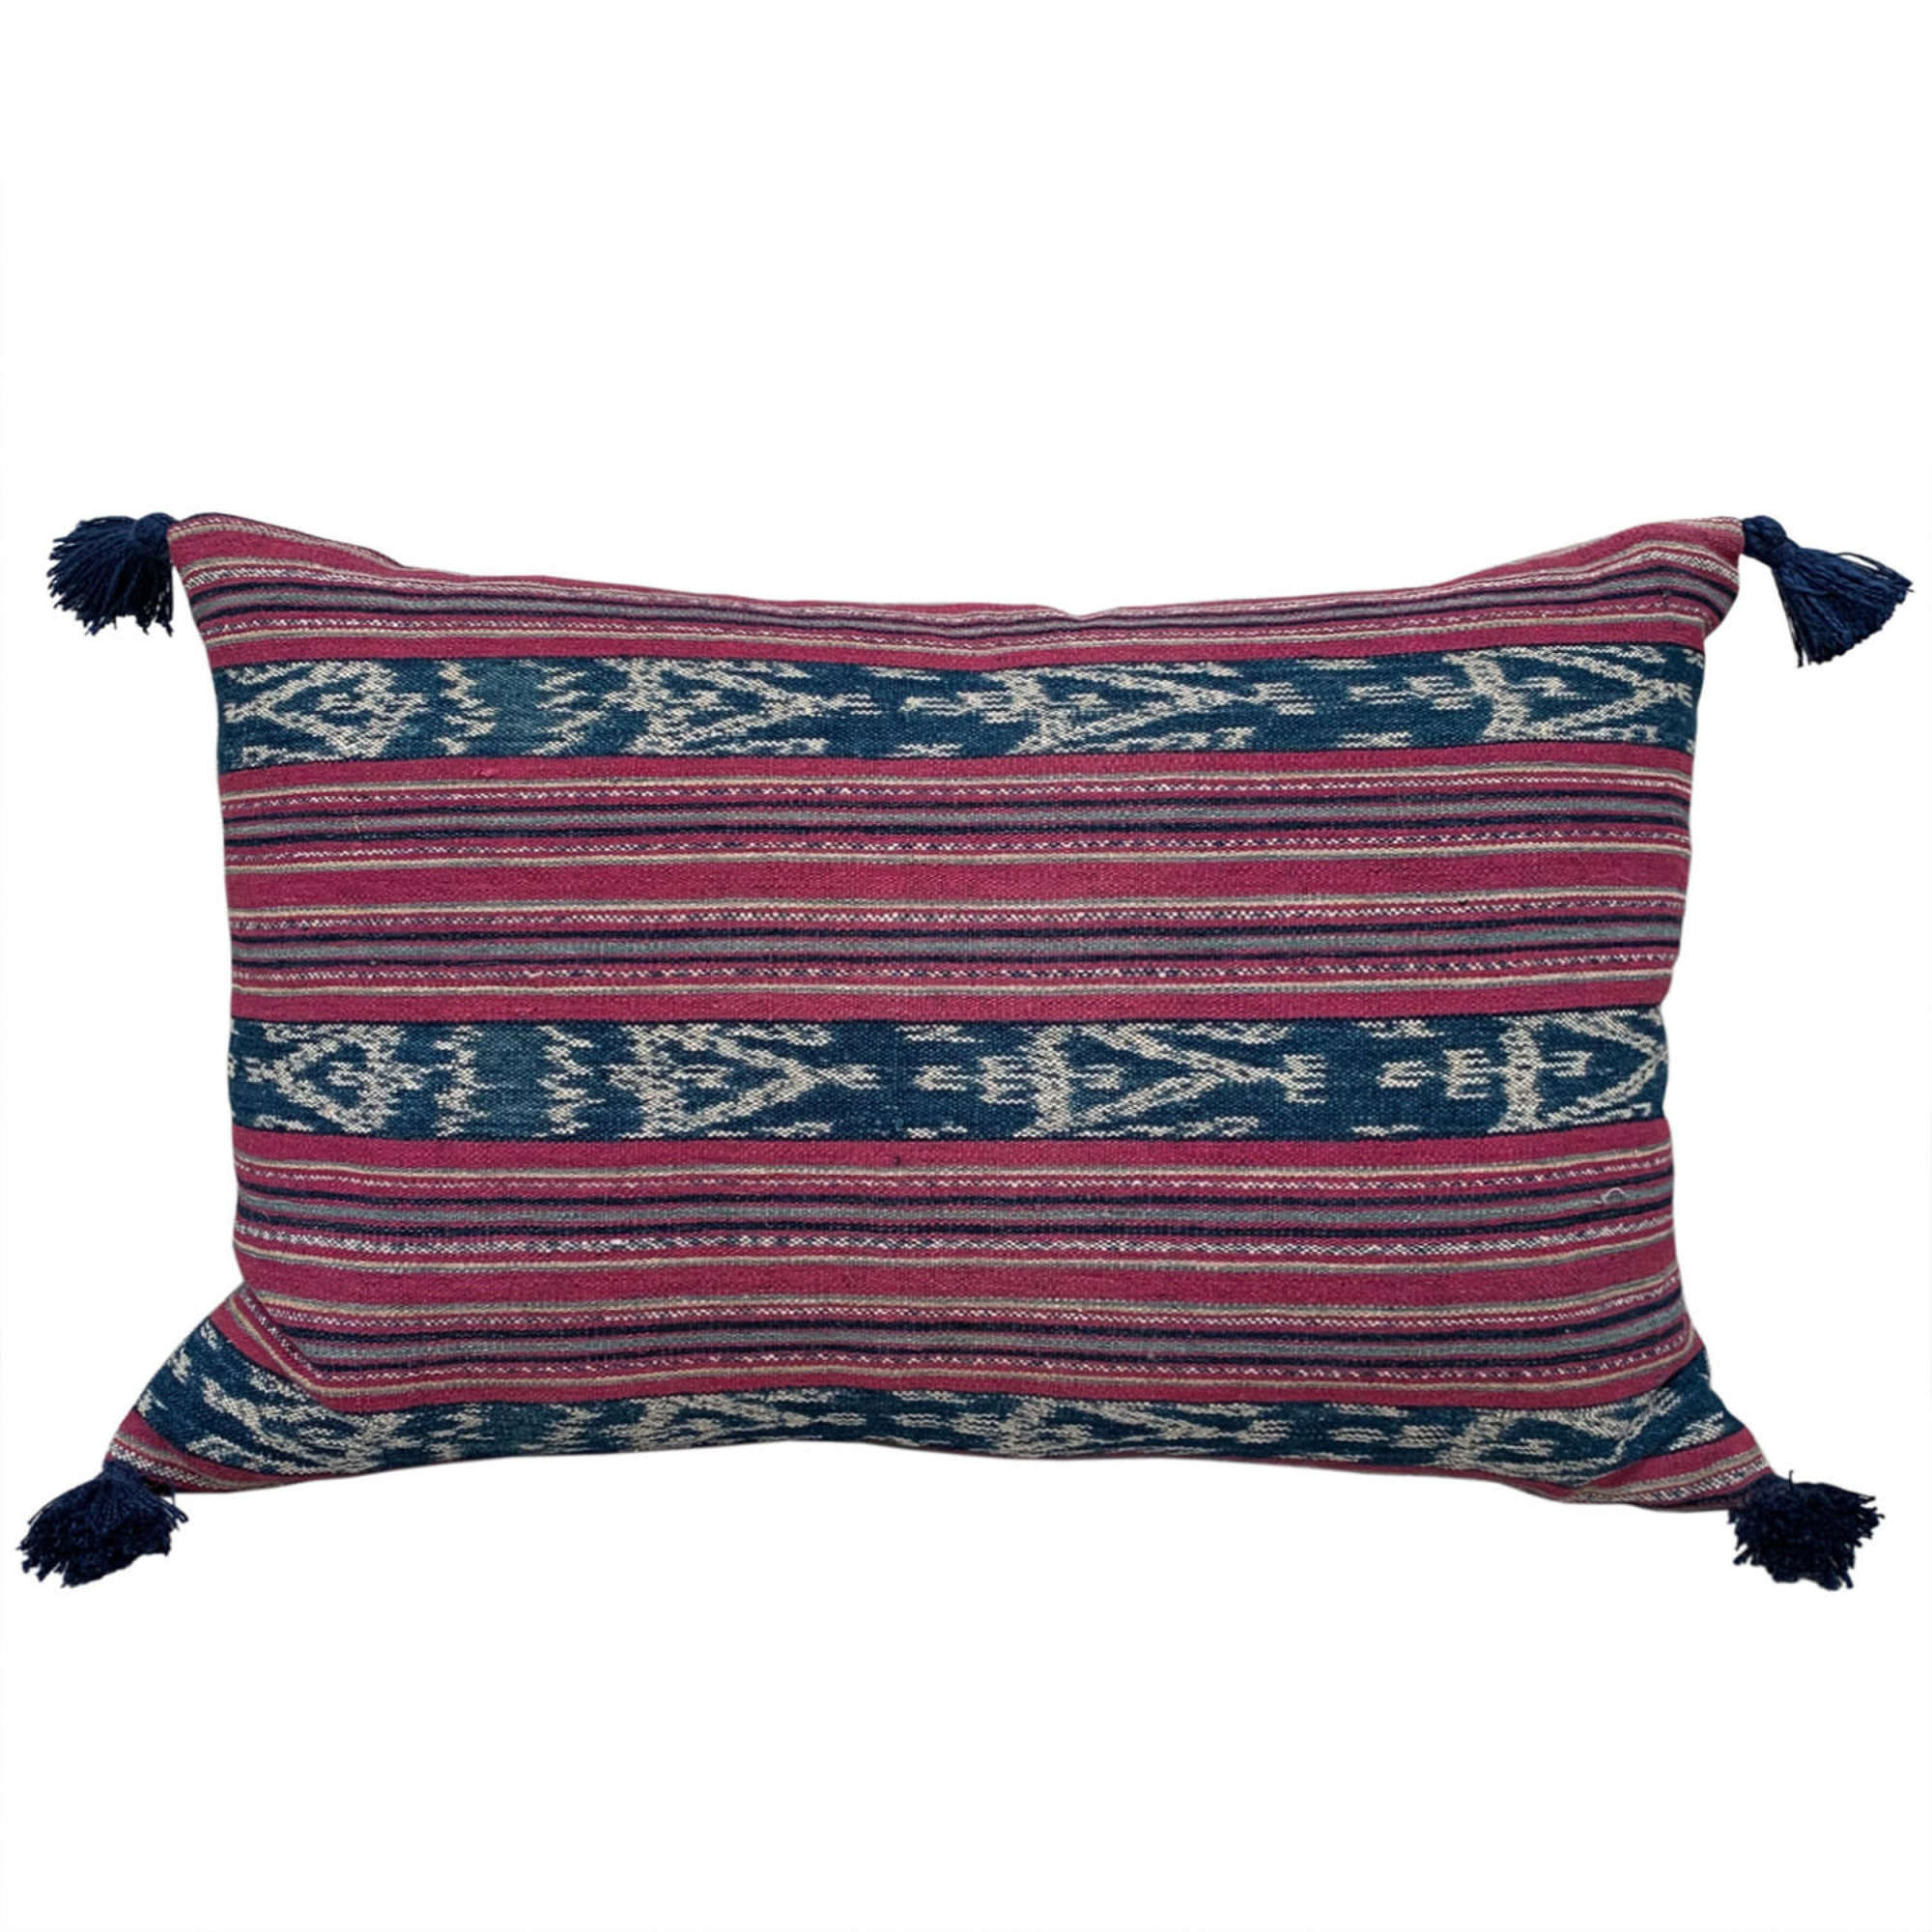 Cochineal ikat cushions